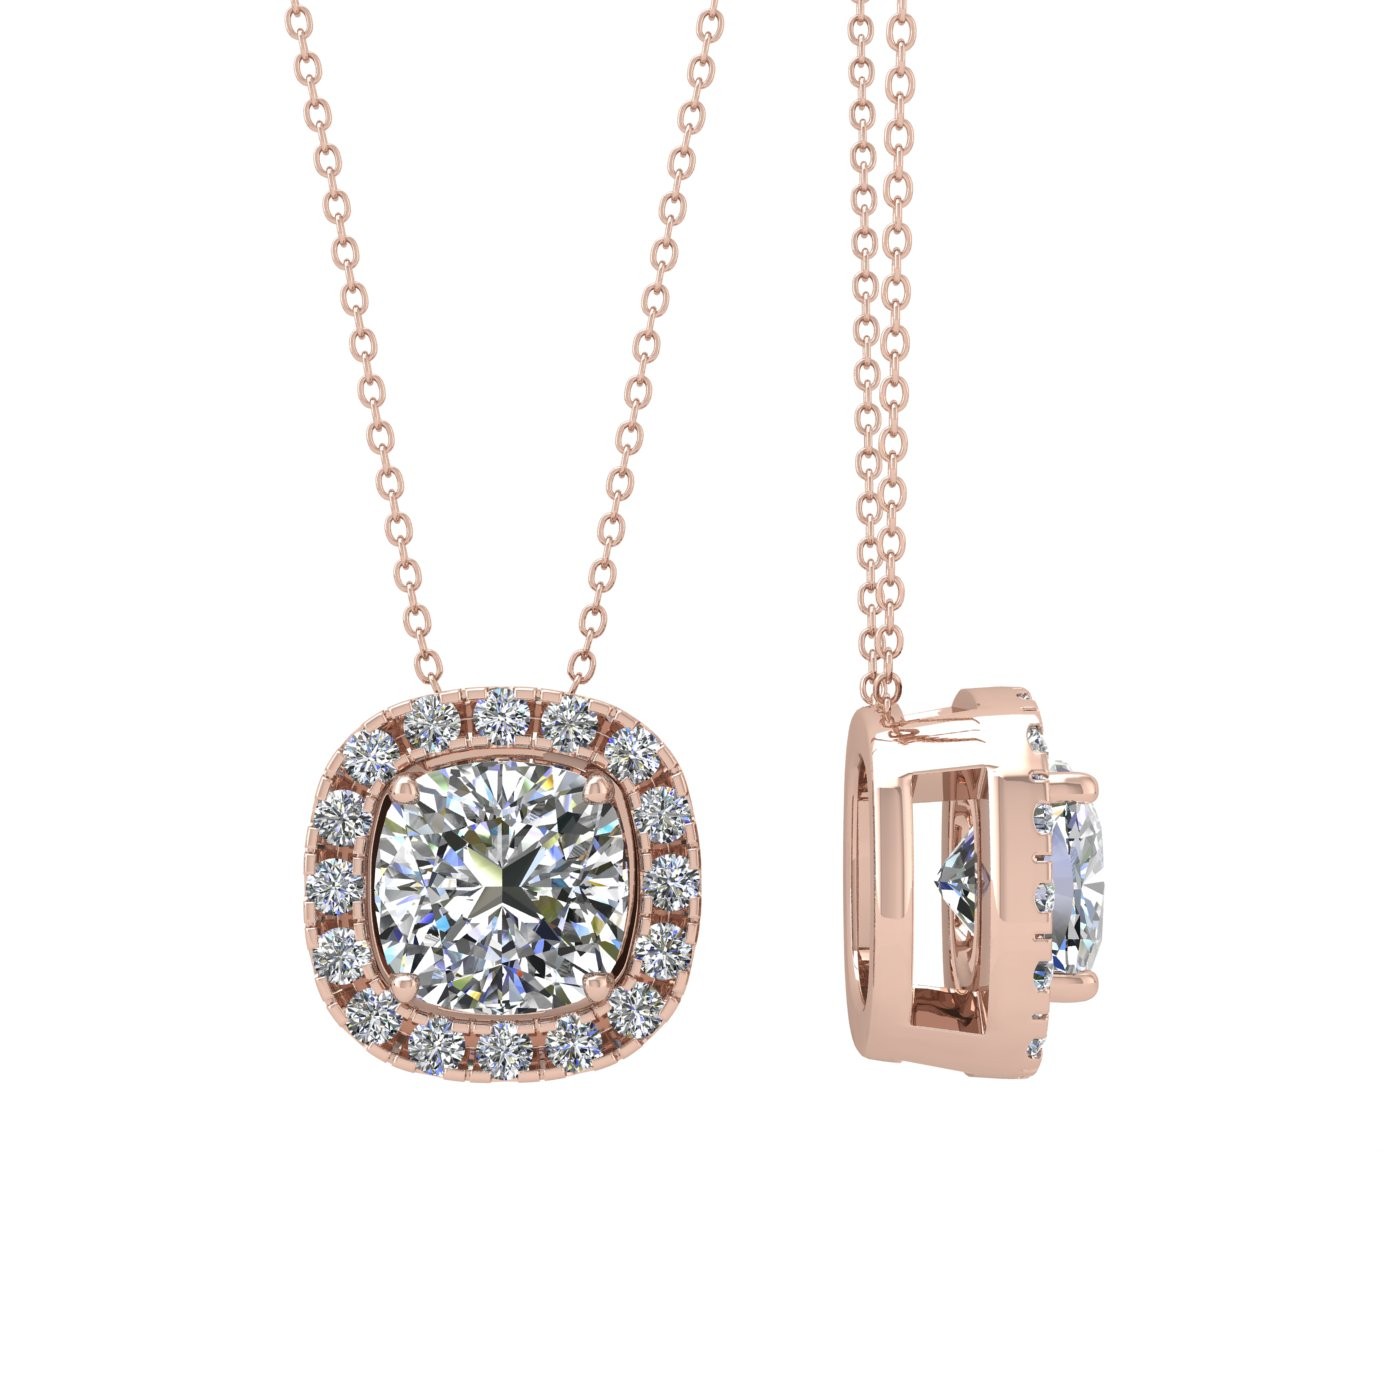 18k rose gold  1 ct 4 prongs cushion shape diamond pendant with diamond pavÉ set halo Photos & images